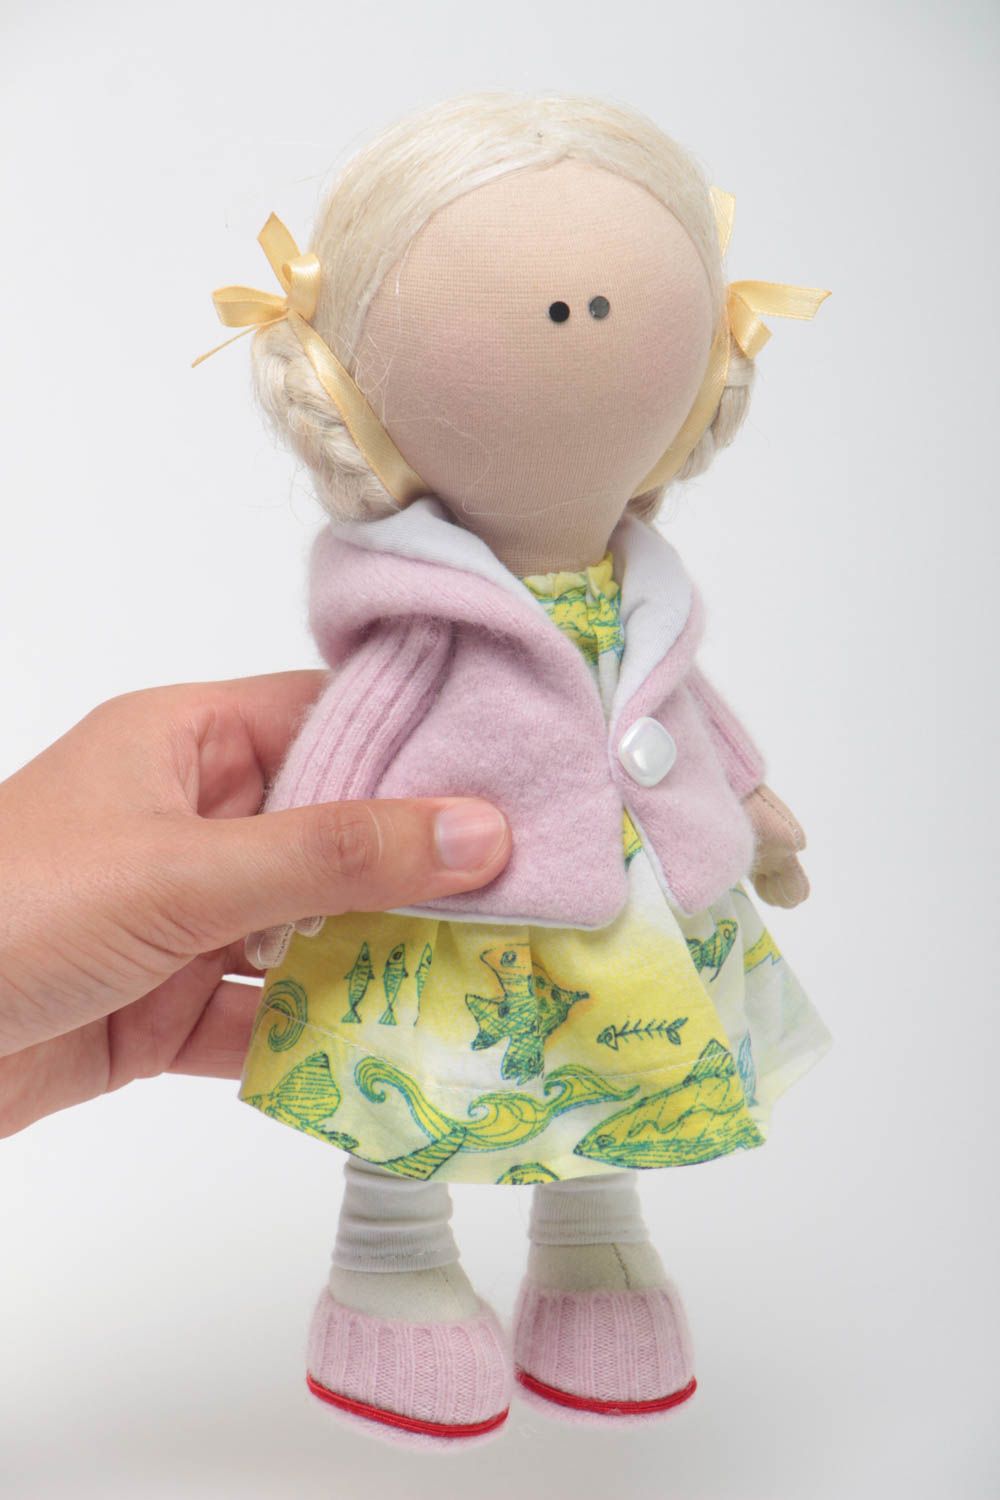 Handmade rag doll childrens soft stuffed toy best toys for kids gift ideas photo 5